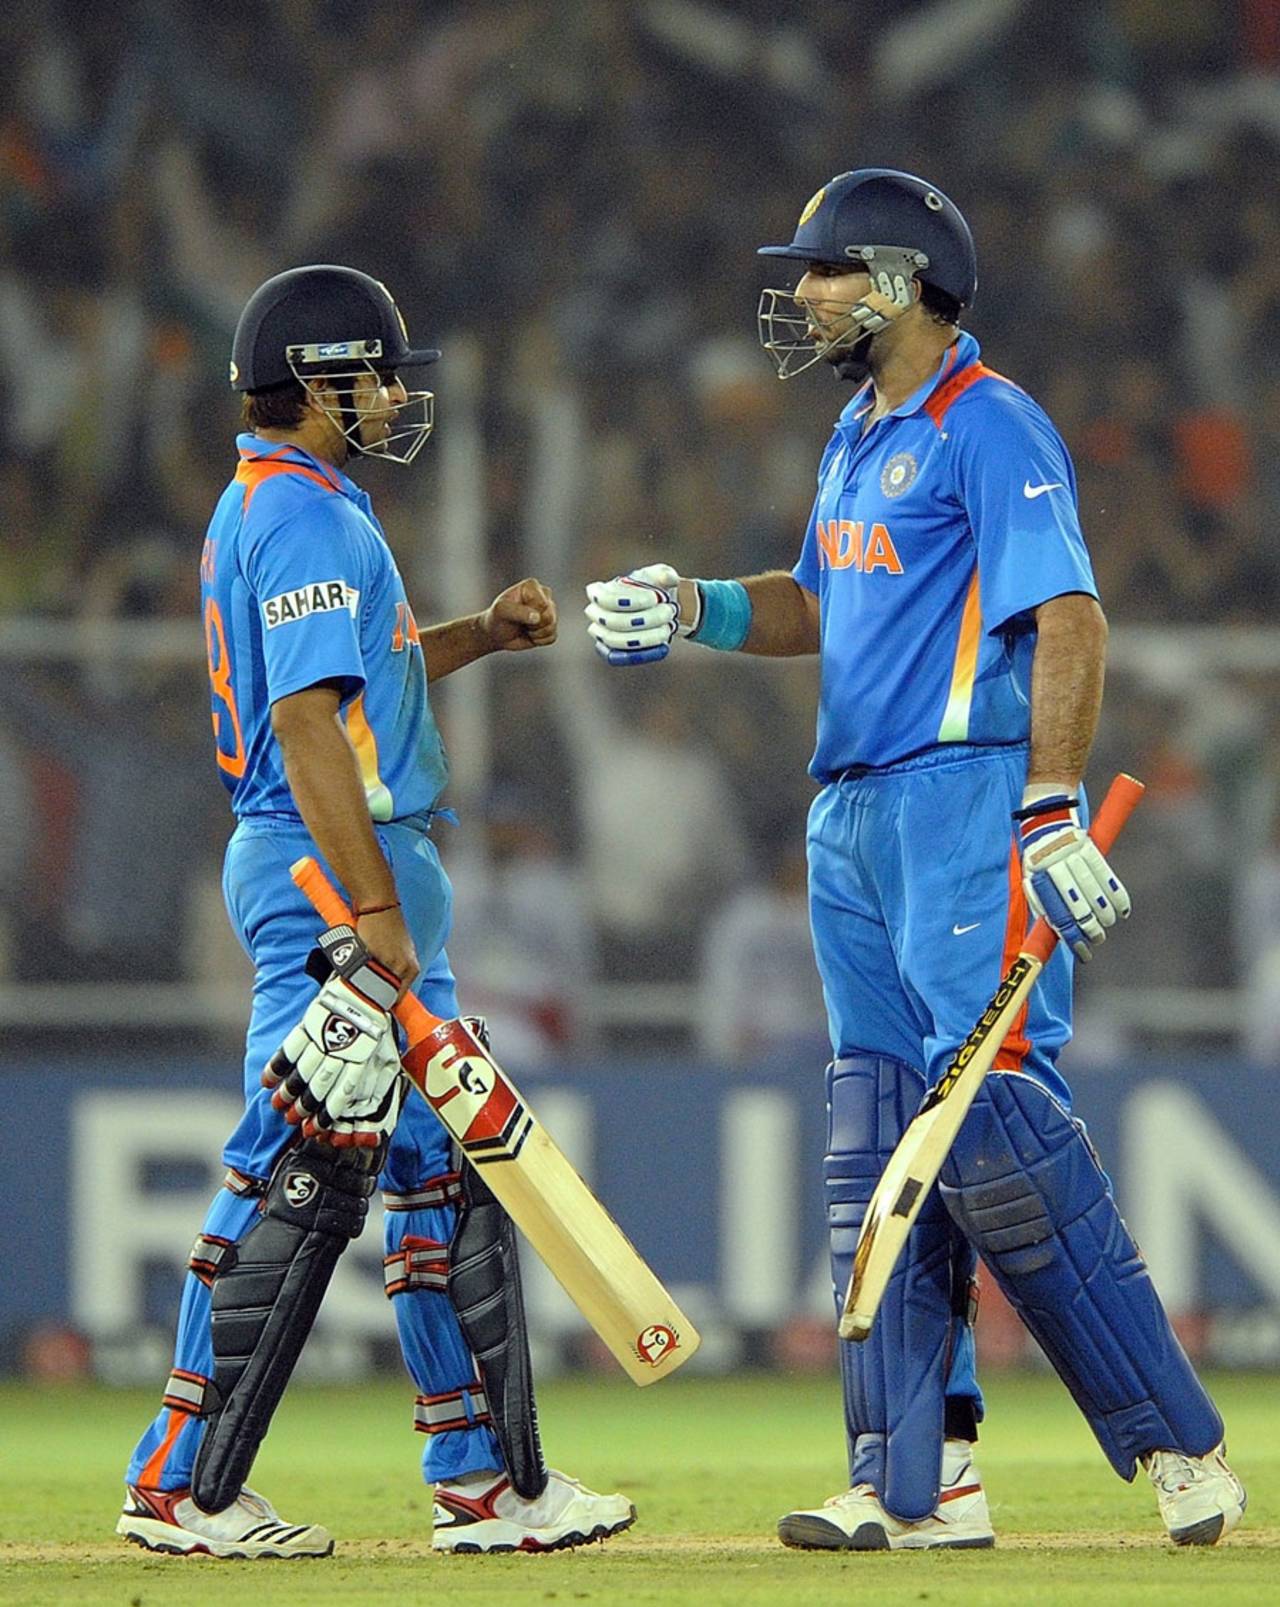 Suresh Raina and Yuvraj Singh strung together an unbeaten 74-run stand, India v Australia, 2nd quarter-final, Ahmedabad, World Cup 2011, March 24, 2011